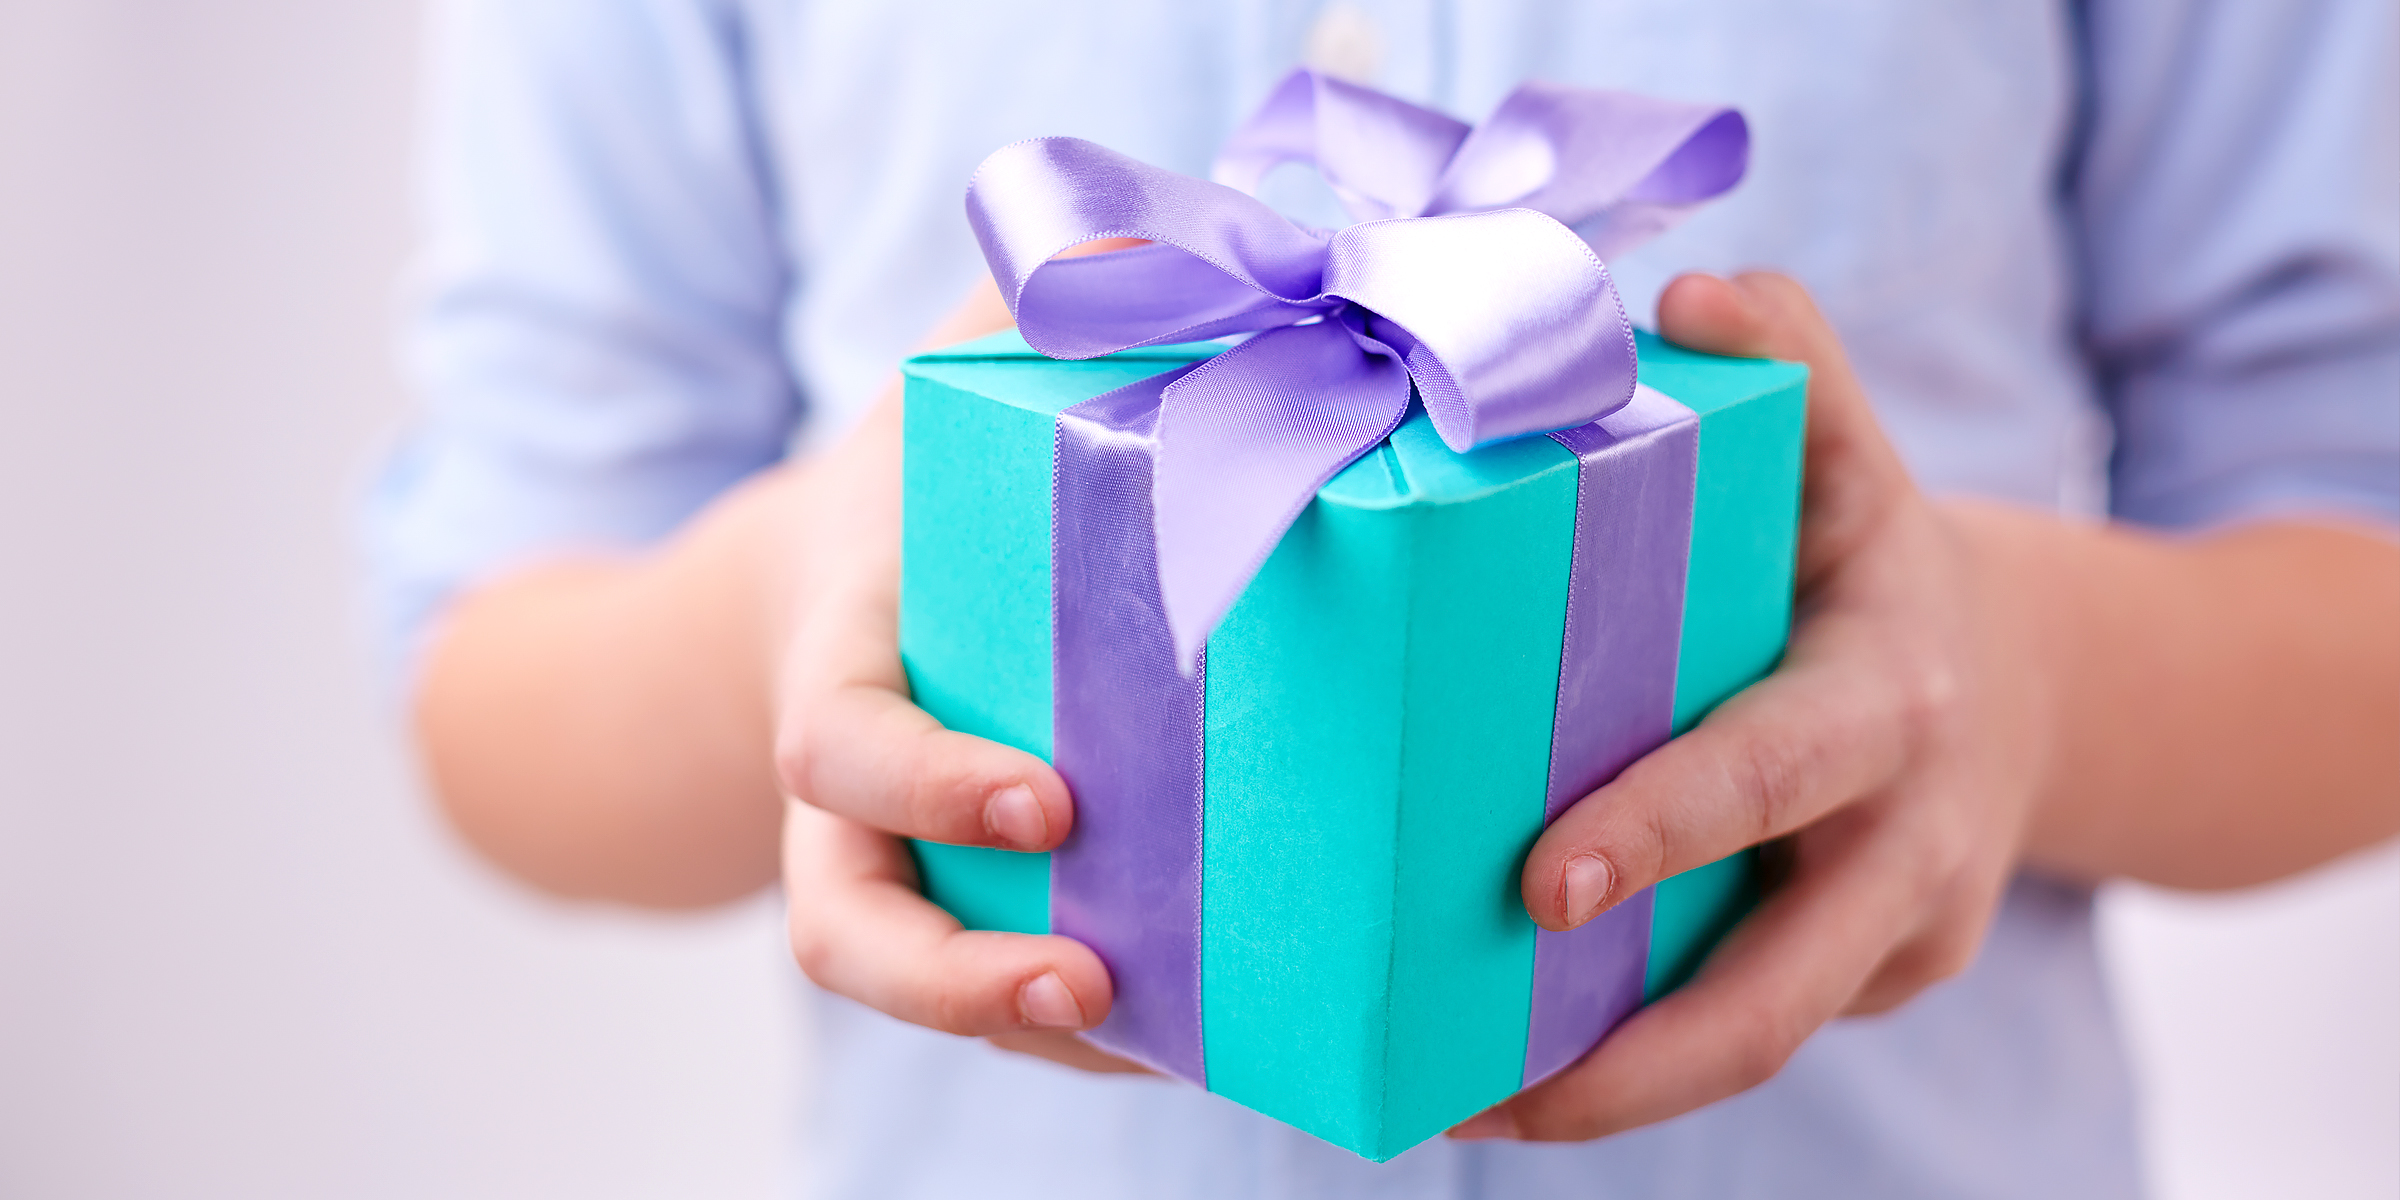 Boy holding present box | Source: Shutterstock